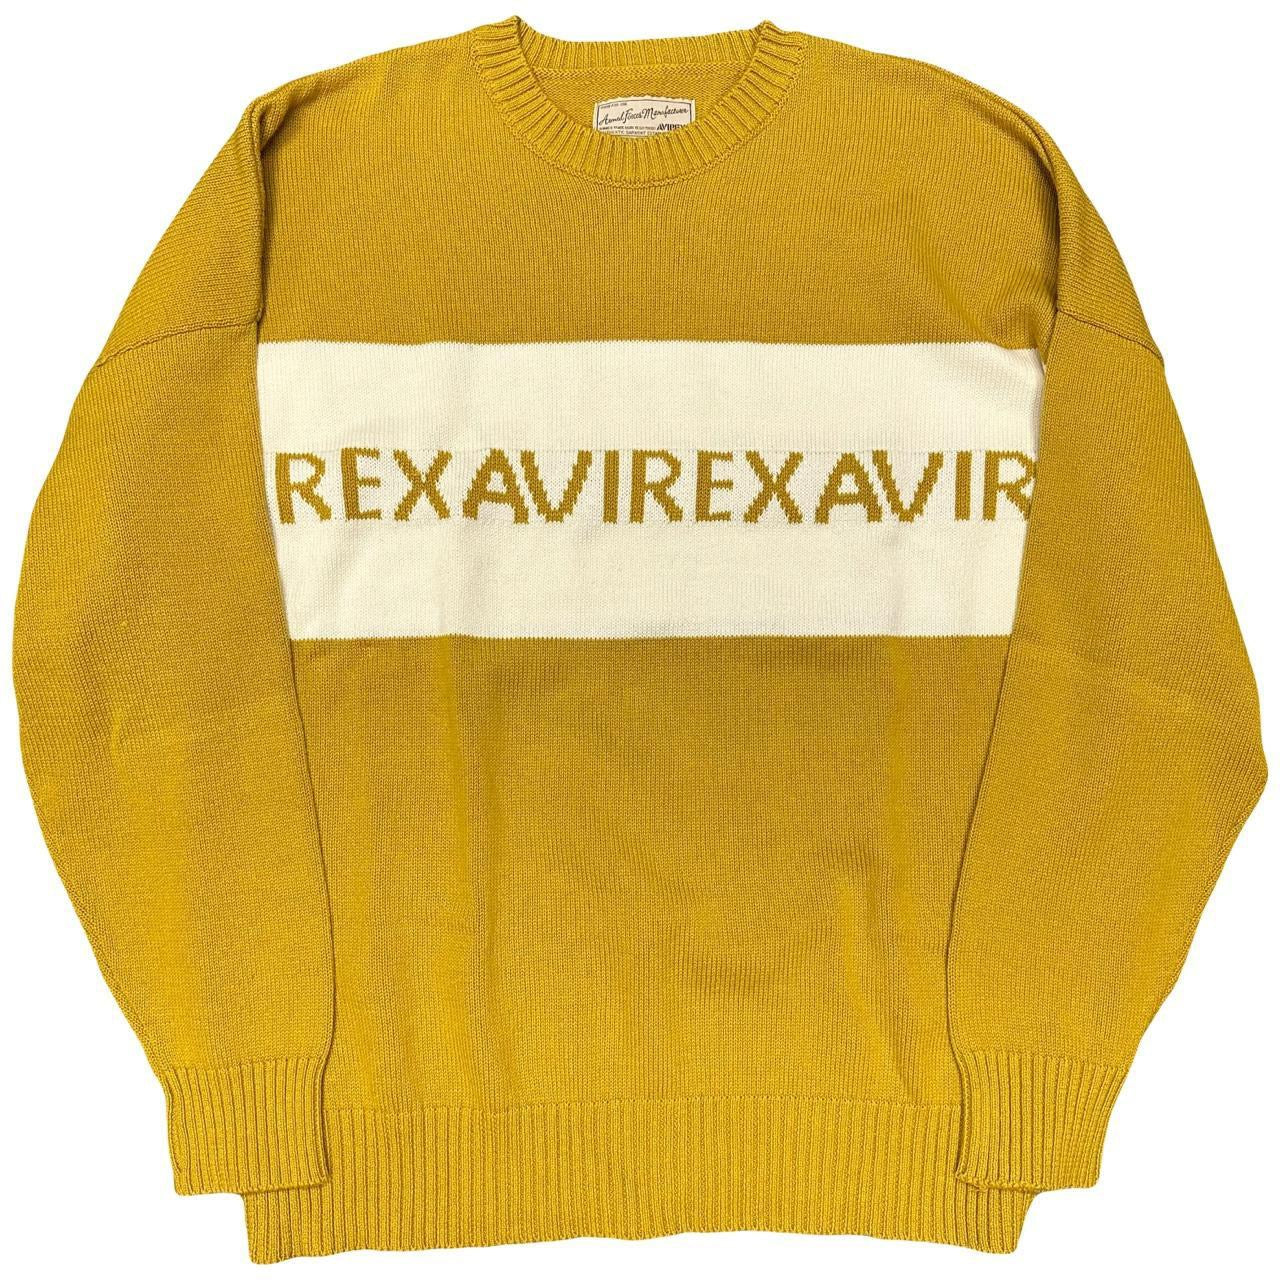 Avirex Repeat Logo Knitted Sweatshirt ( L )